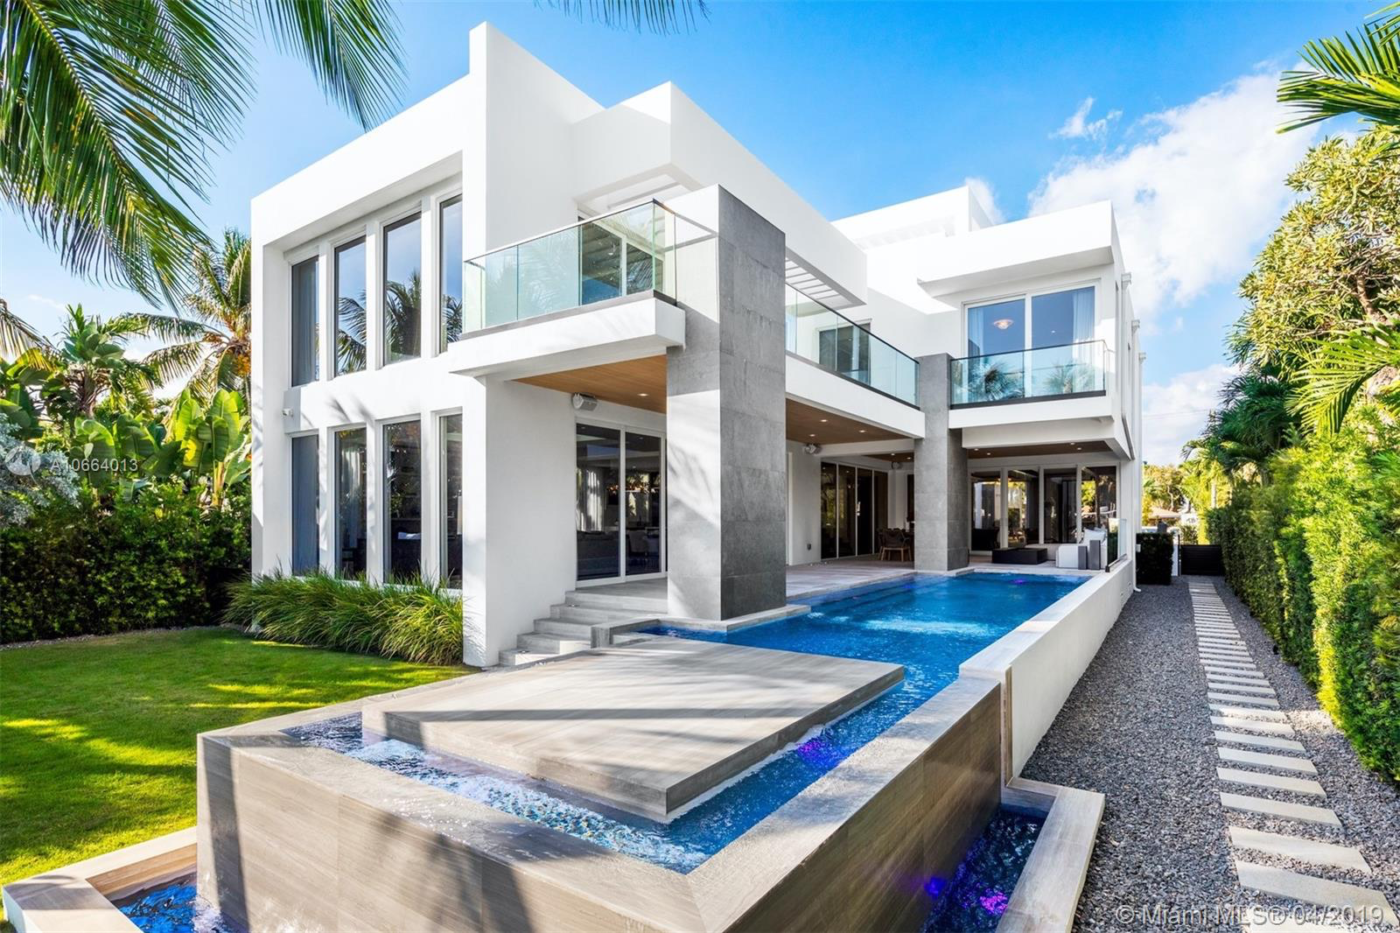 Perfect Miami Beach Homes for Entertaining